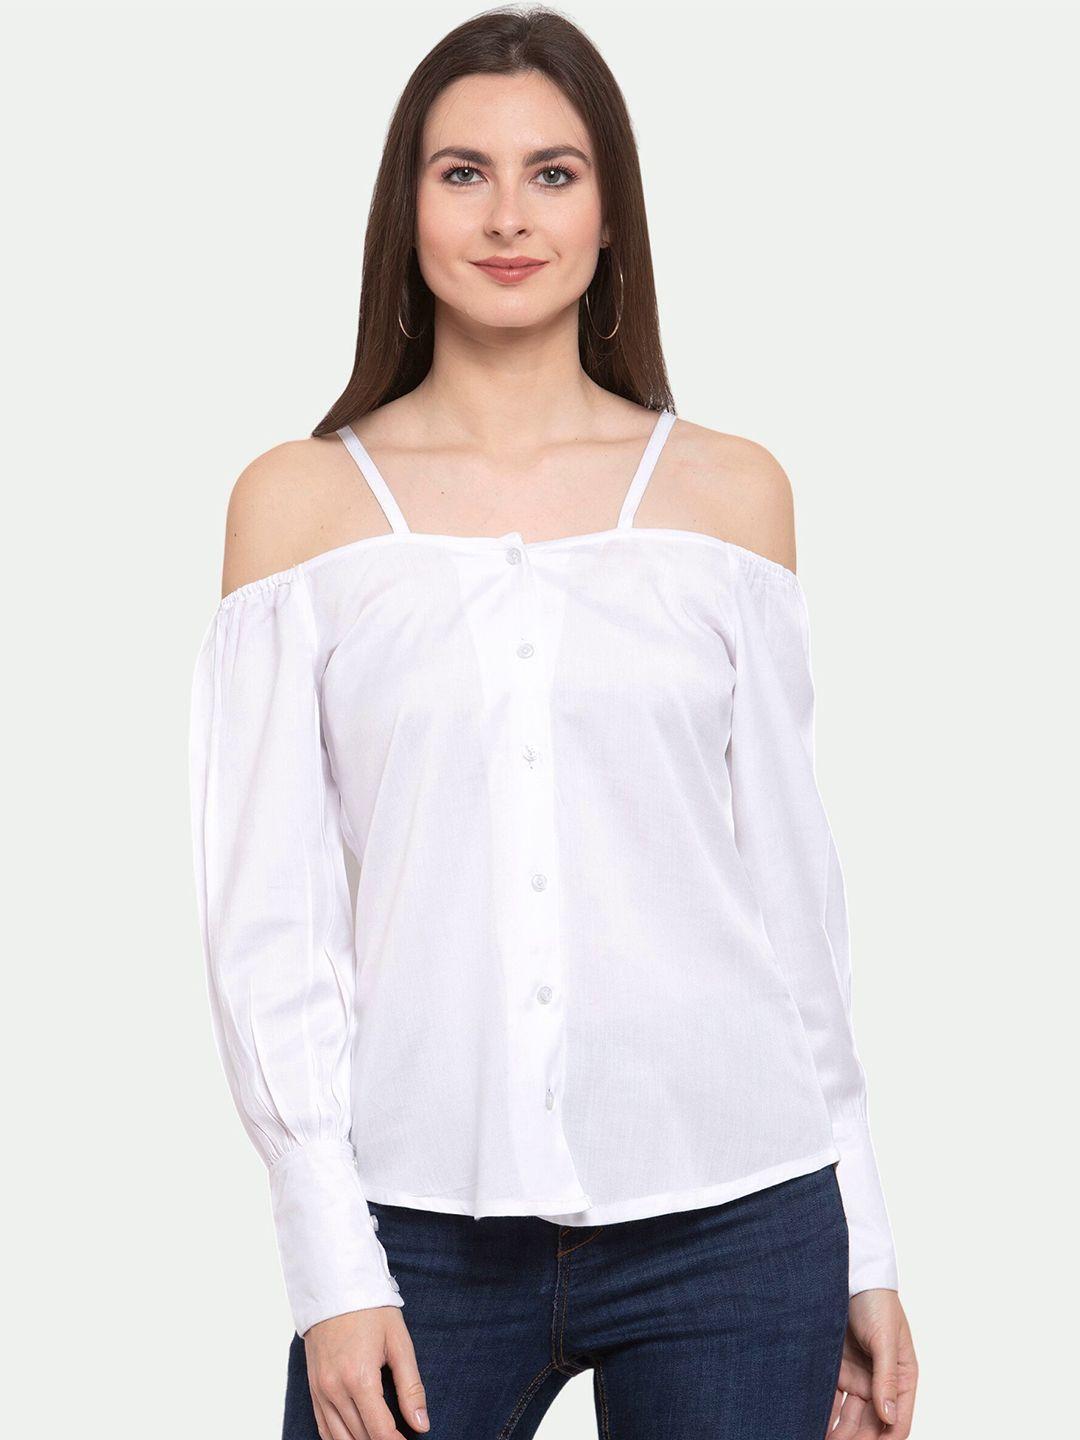 patrorna women white off-shoulder shirt style top